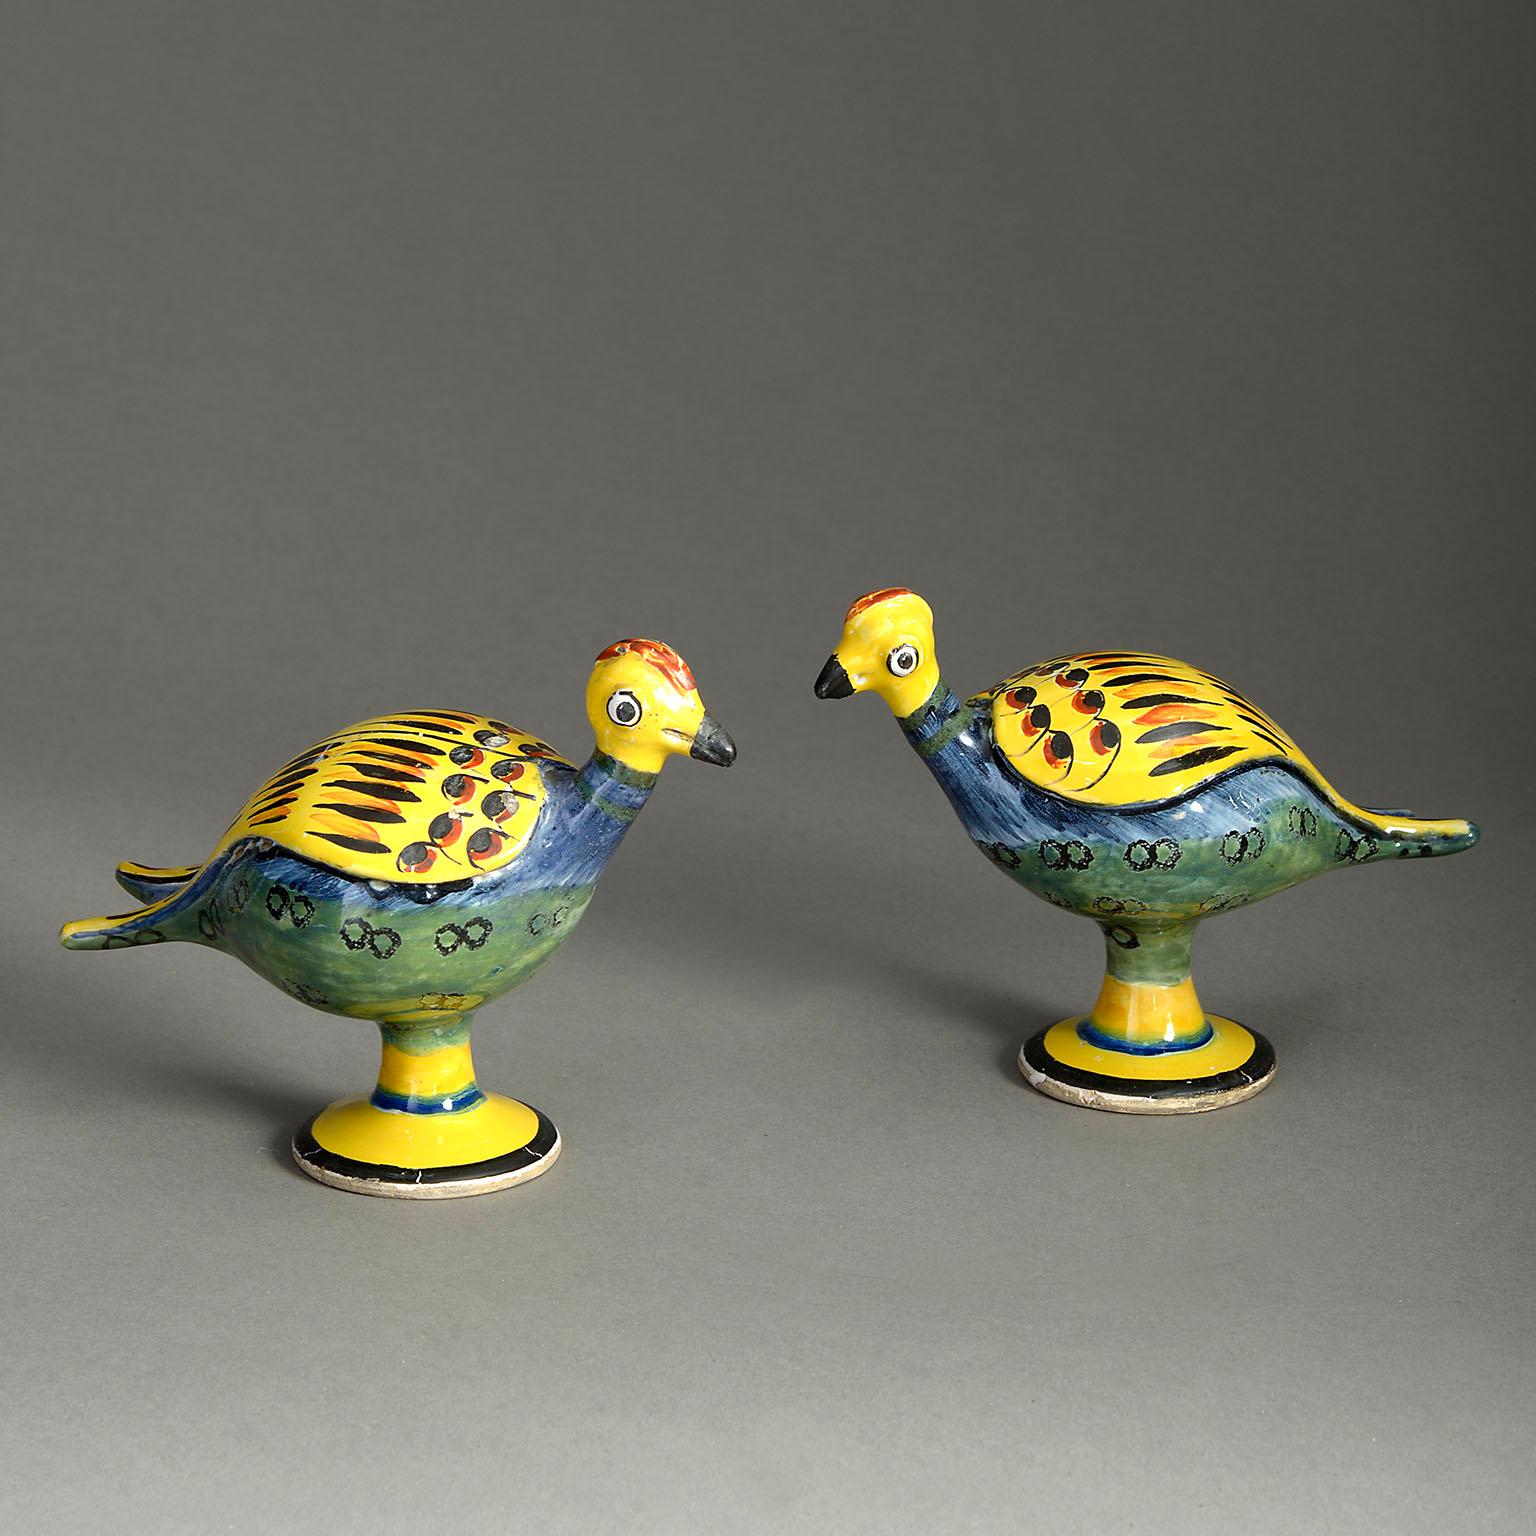 Rare pair of late 19th century polychrome glazed pottery birds.